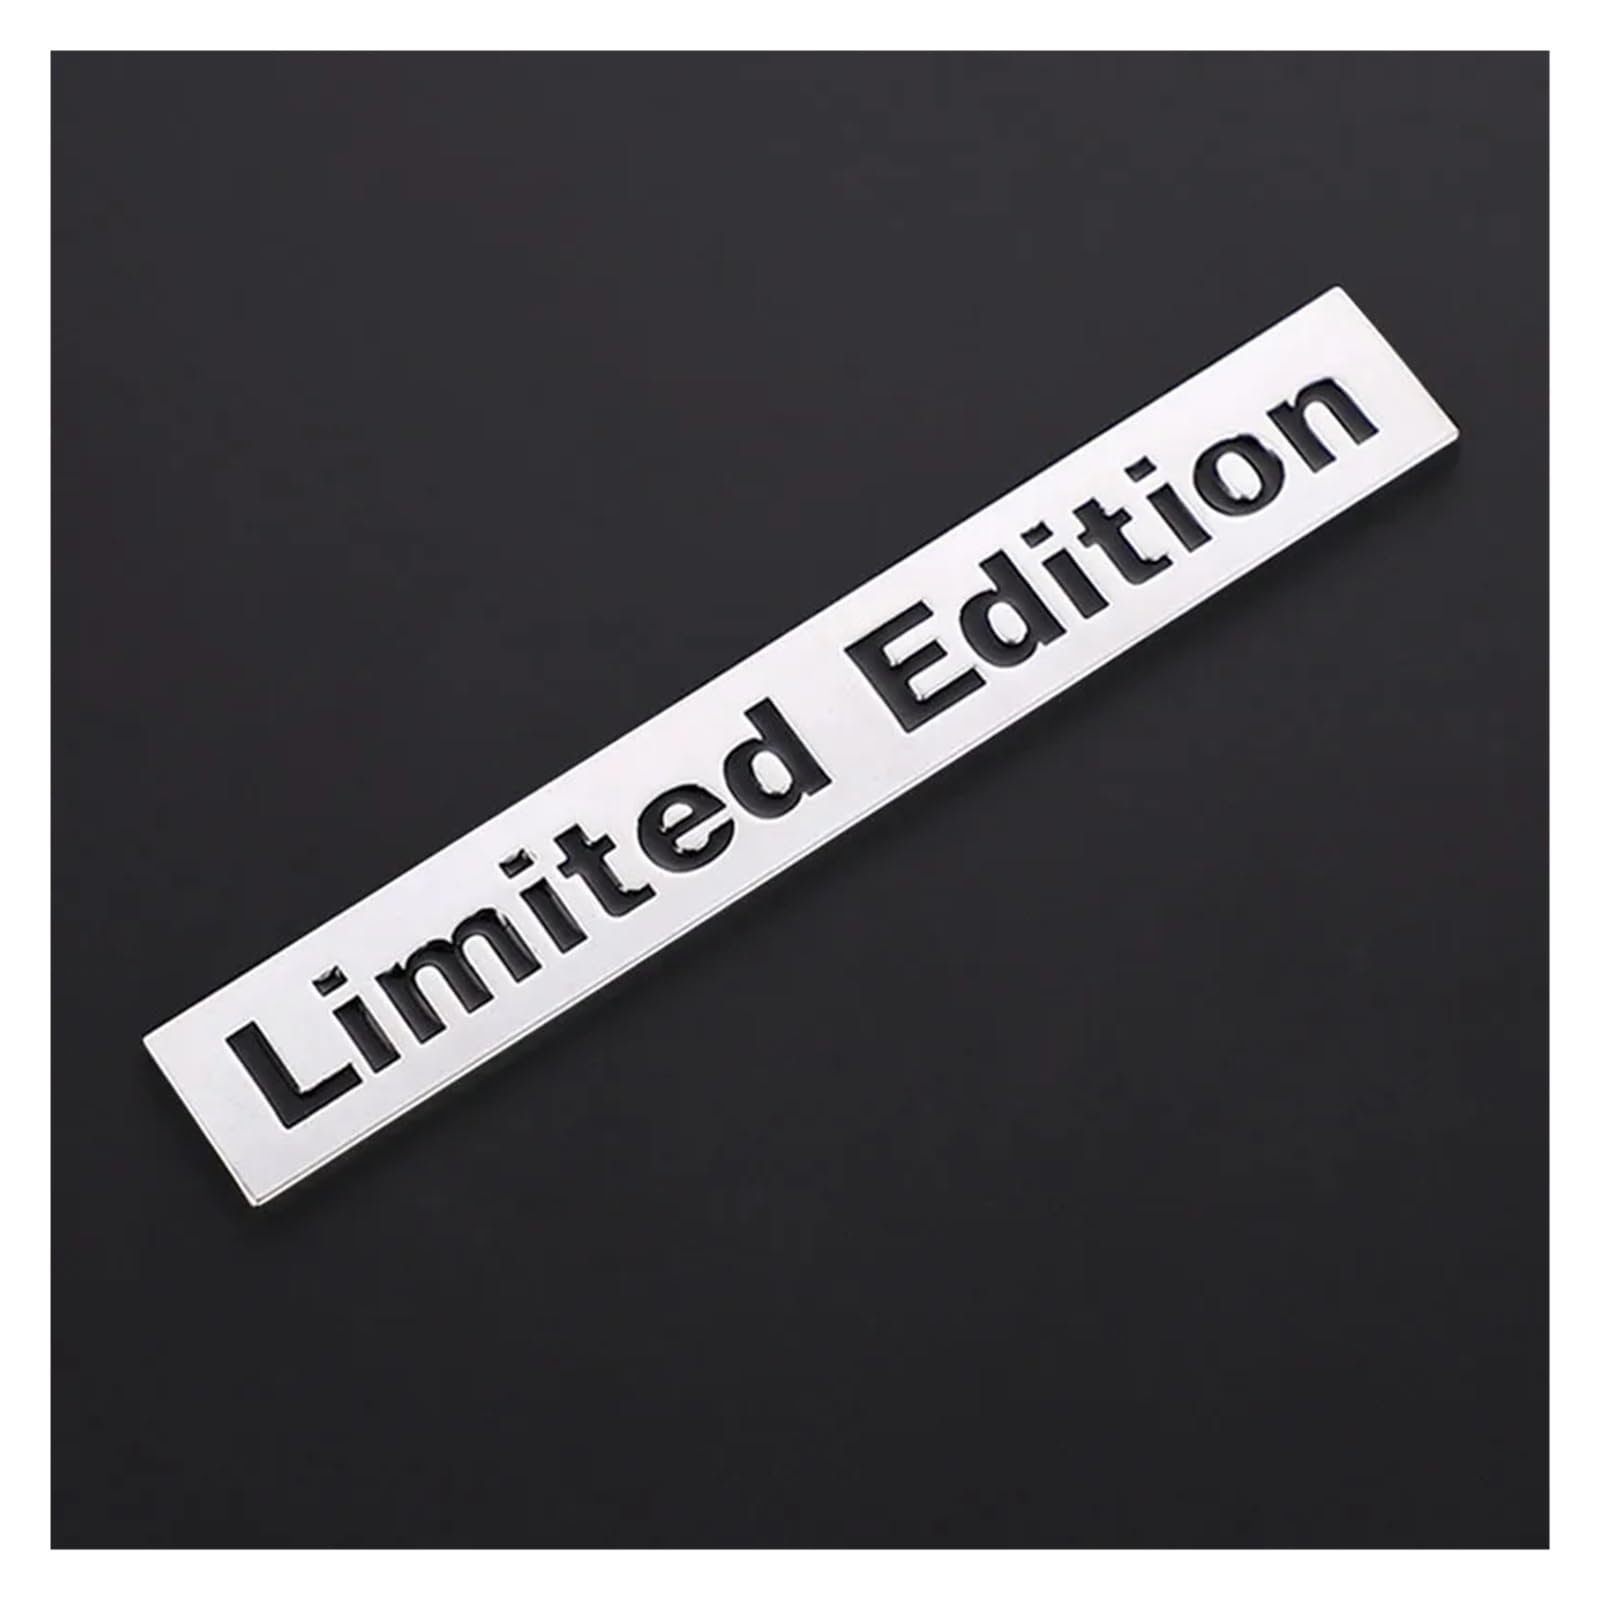 AQXYWQOL 3D Metall LIMITED Edition Emblem Abzeichen Auto Aufkleber Aufkleber Farbe ist konstant, verblasst nicht und beschädigt(10cm Limited Edition-01) von AQXYWQOL